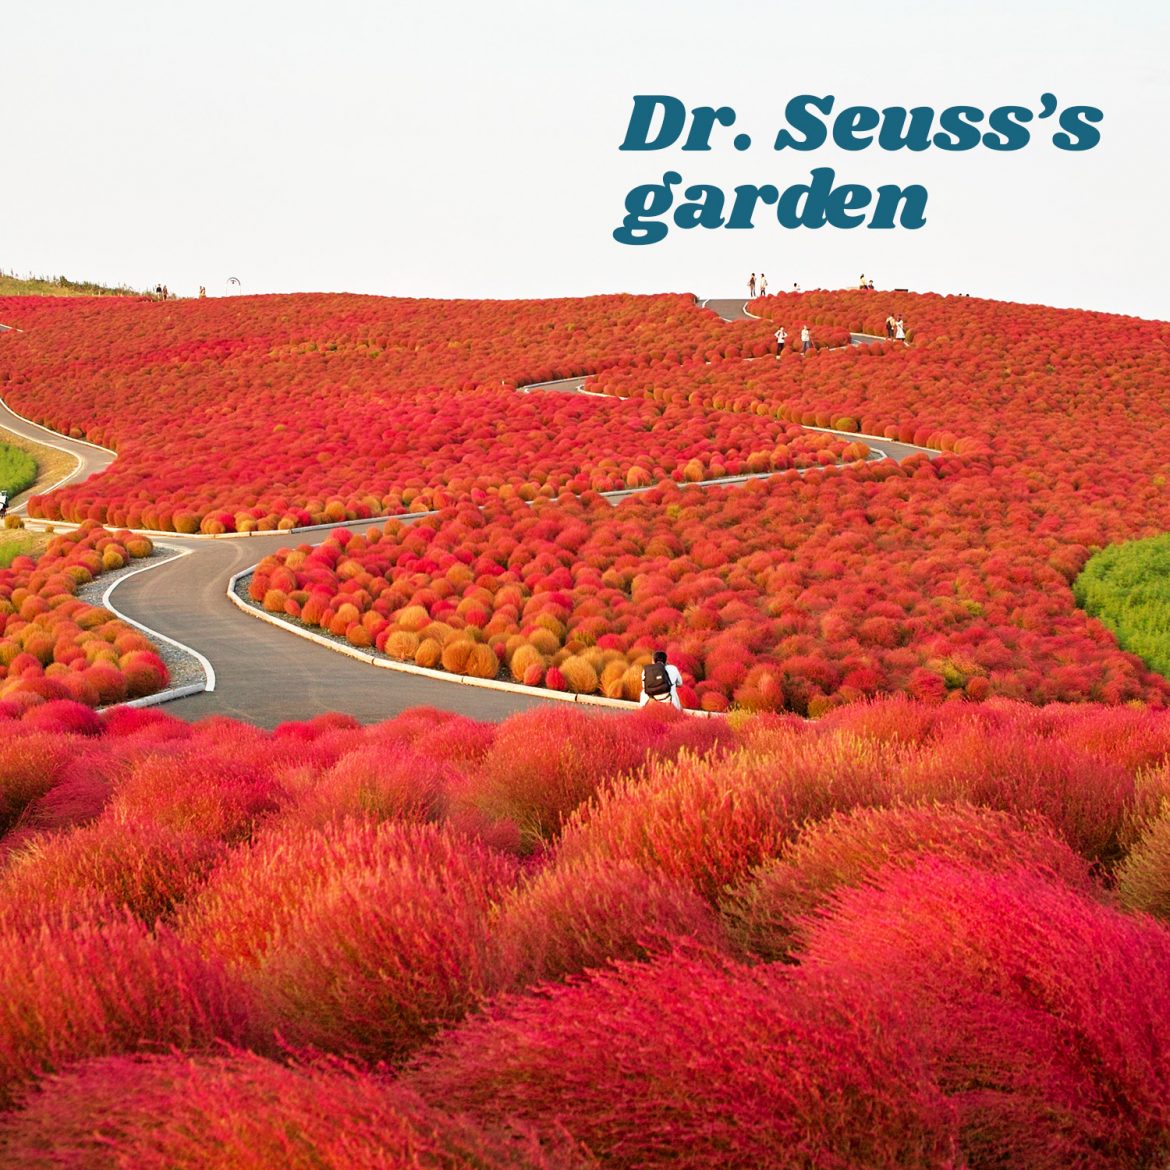 Dr. Seuss’s garden